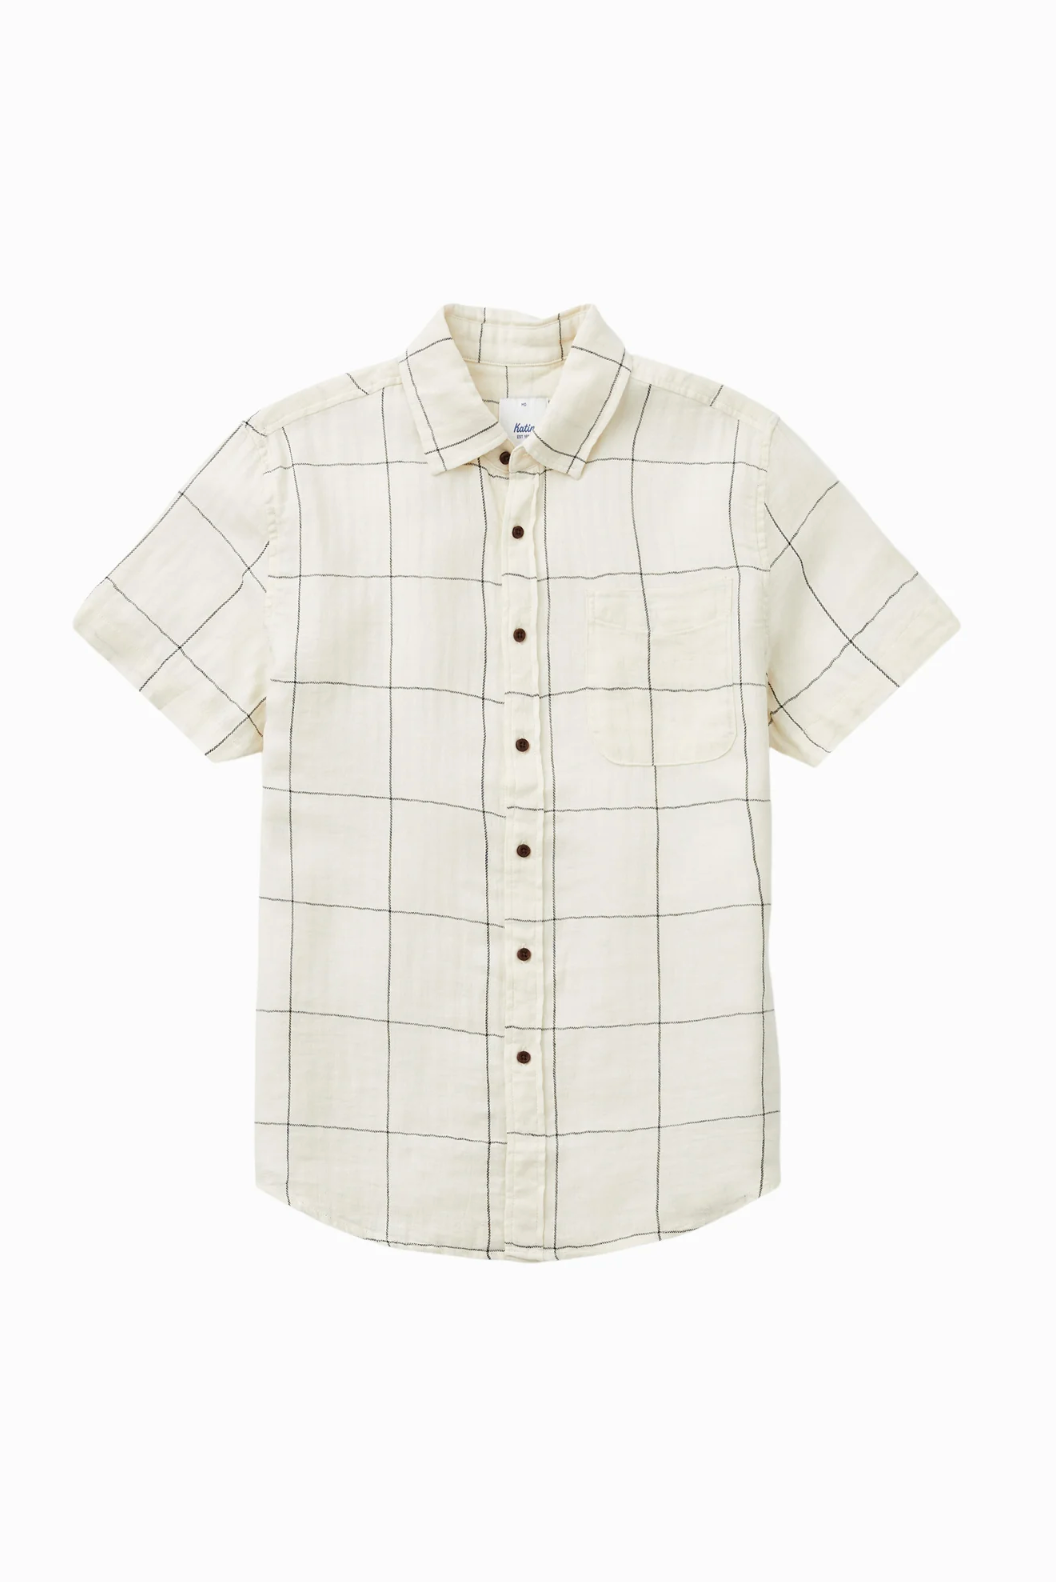 Monty Shirt - Vintage White